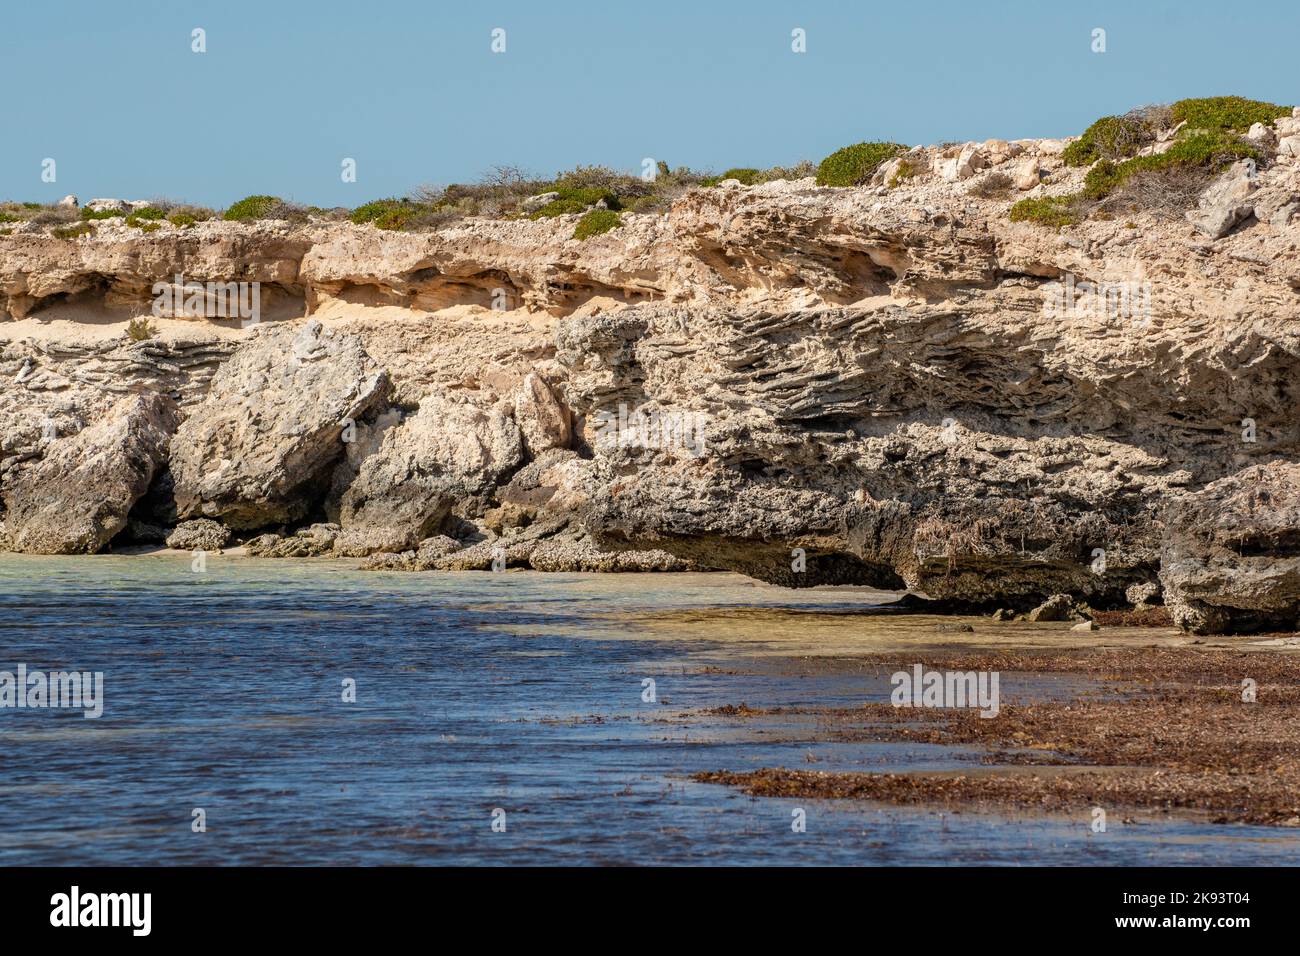 Cliff Erosion at Turtle Bay, East Wallabi, Houtman Abrolhos Islands, WA, Australia Stock Photo